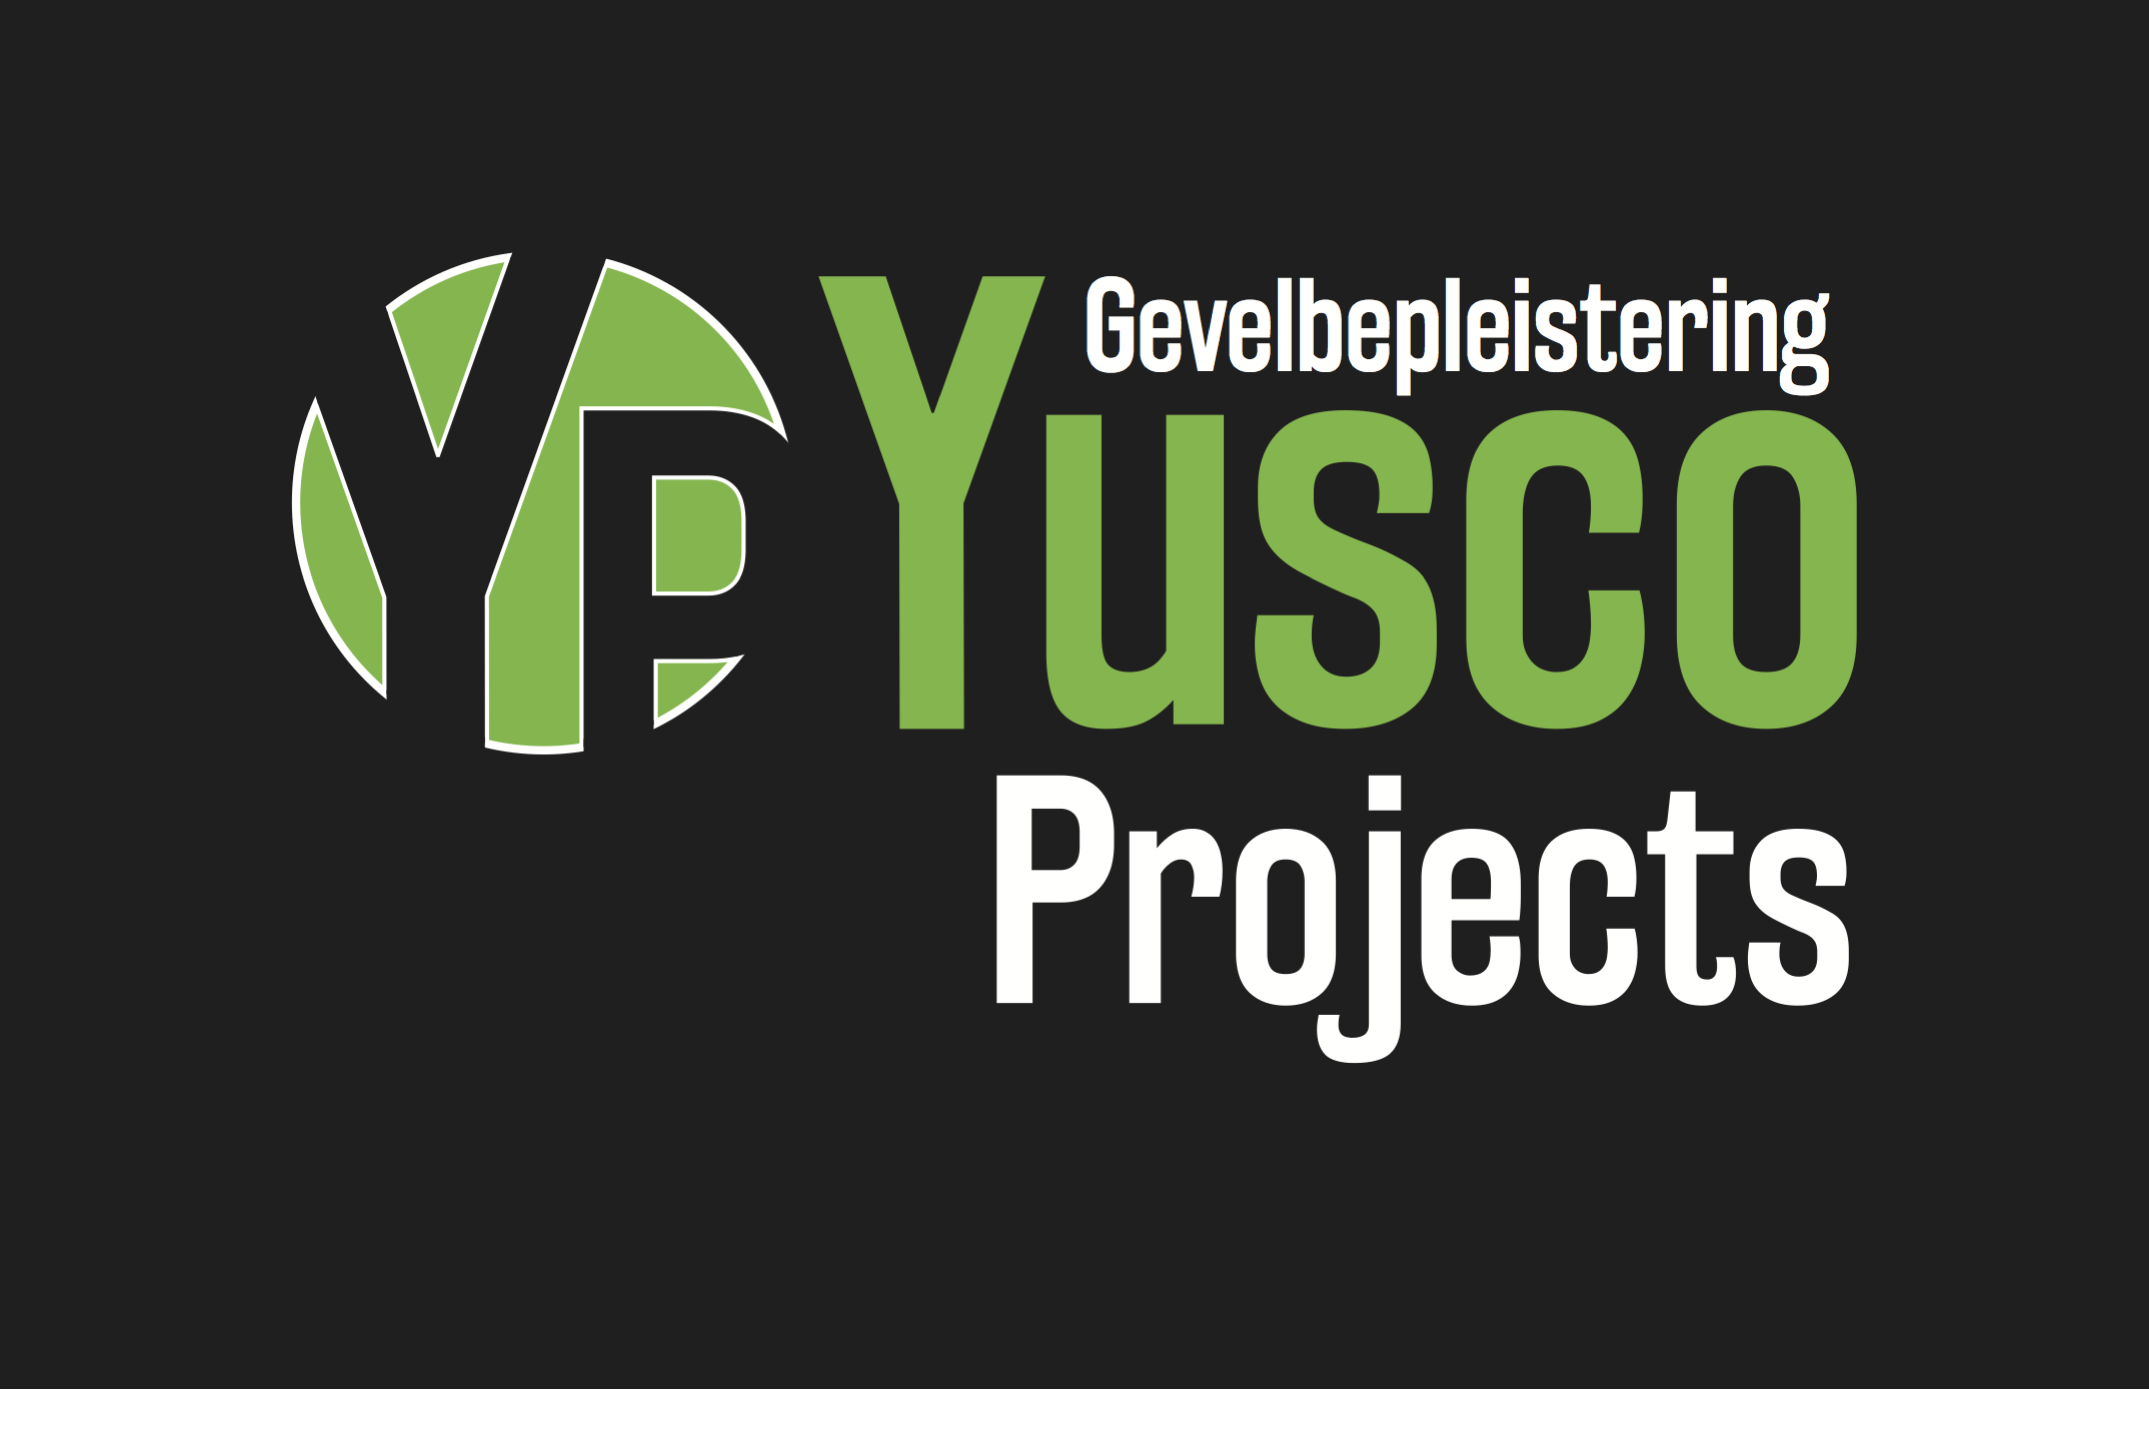 stukadoors Lede Yusco Projects Gevelbepleistering